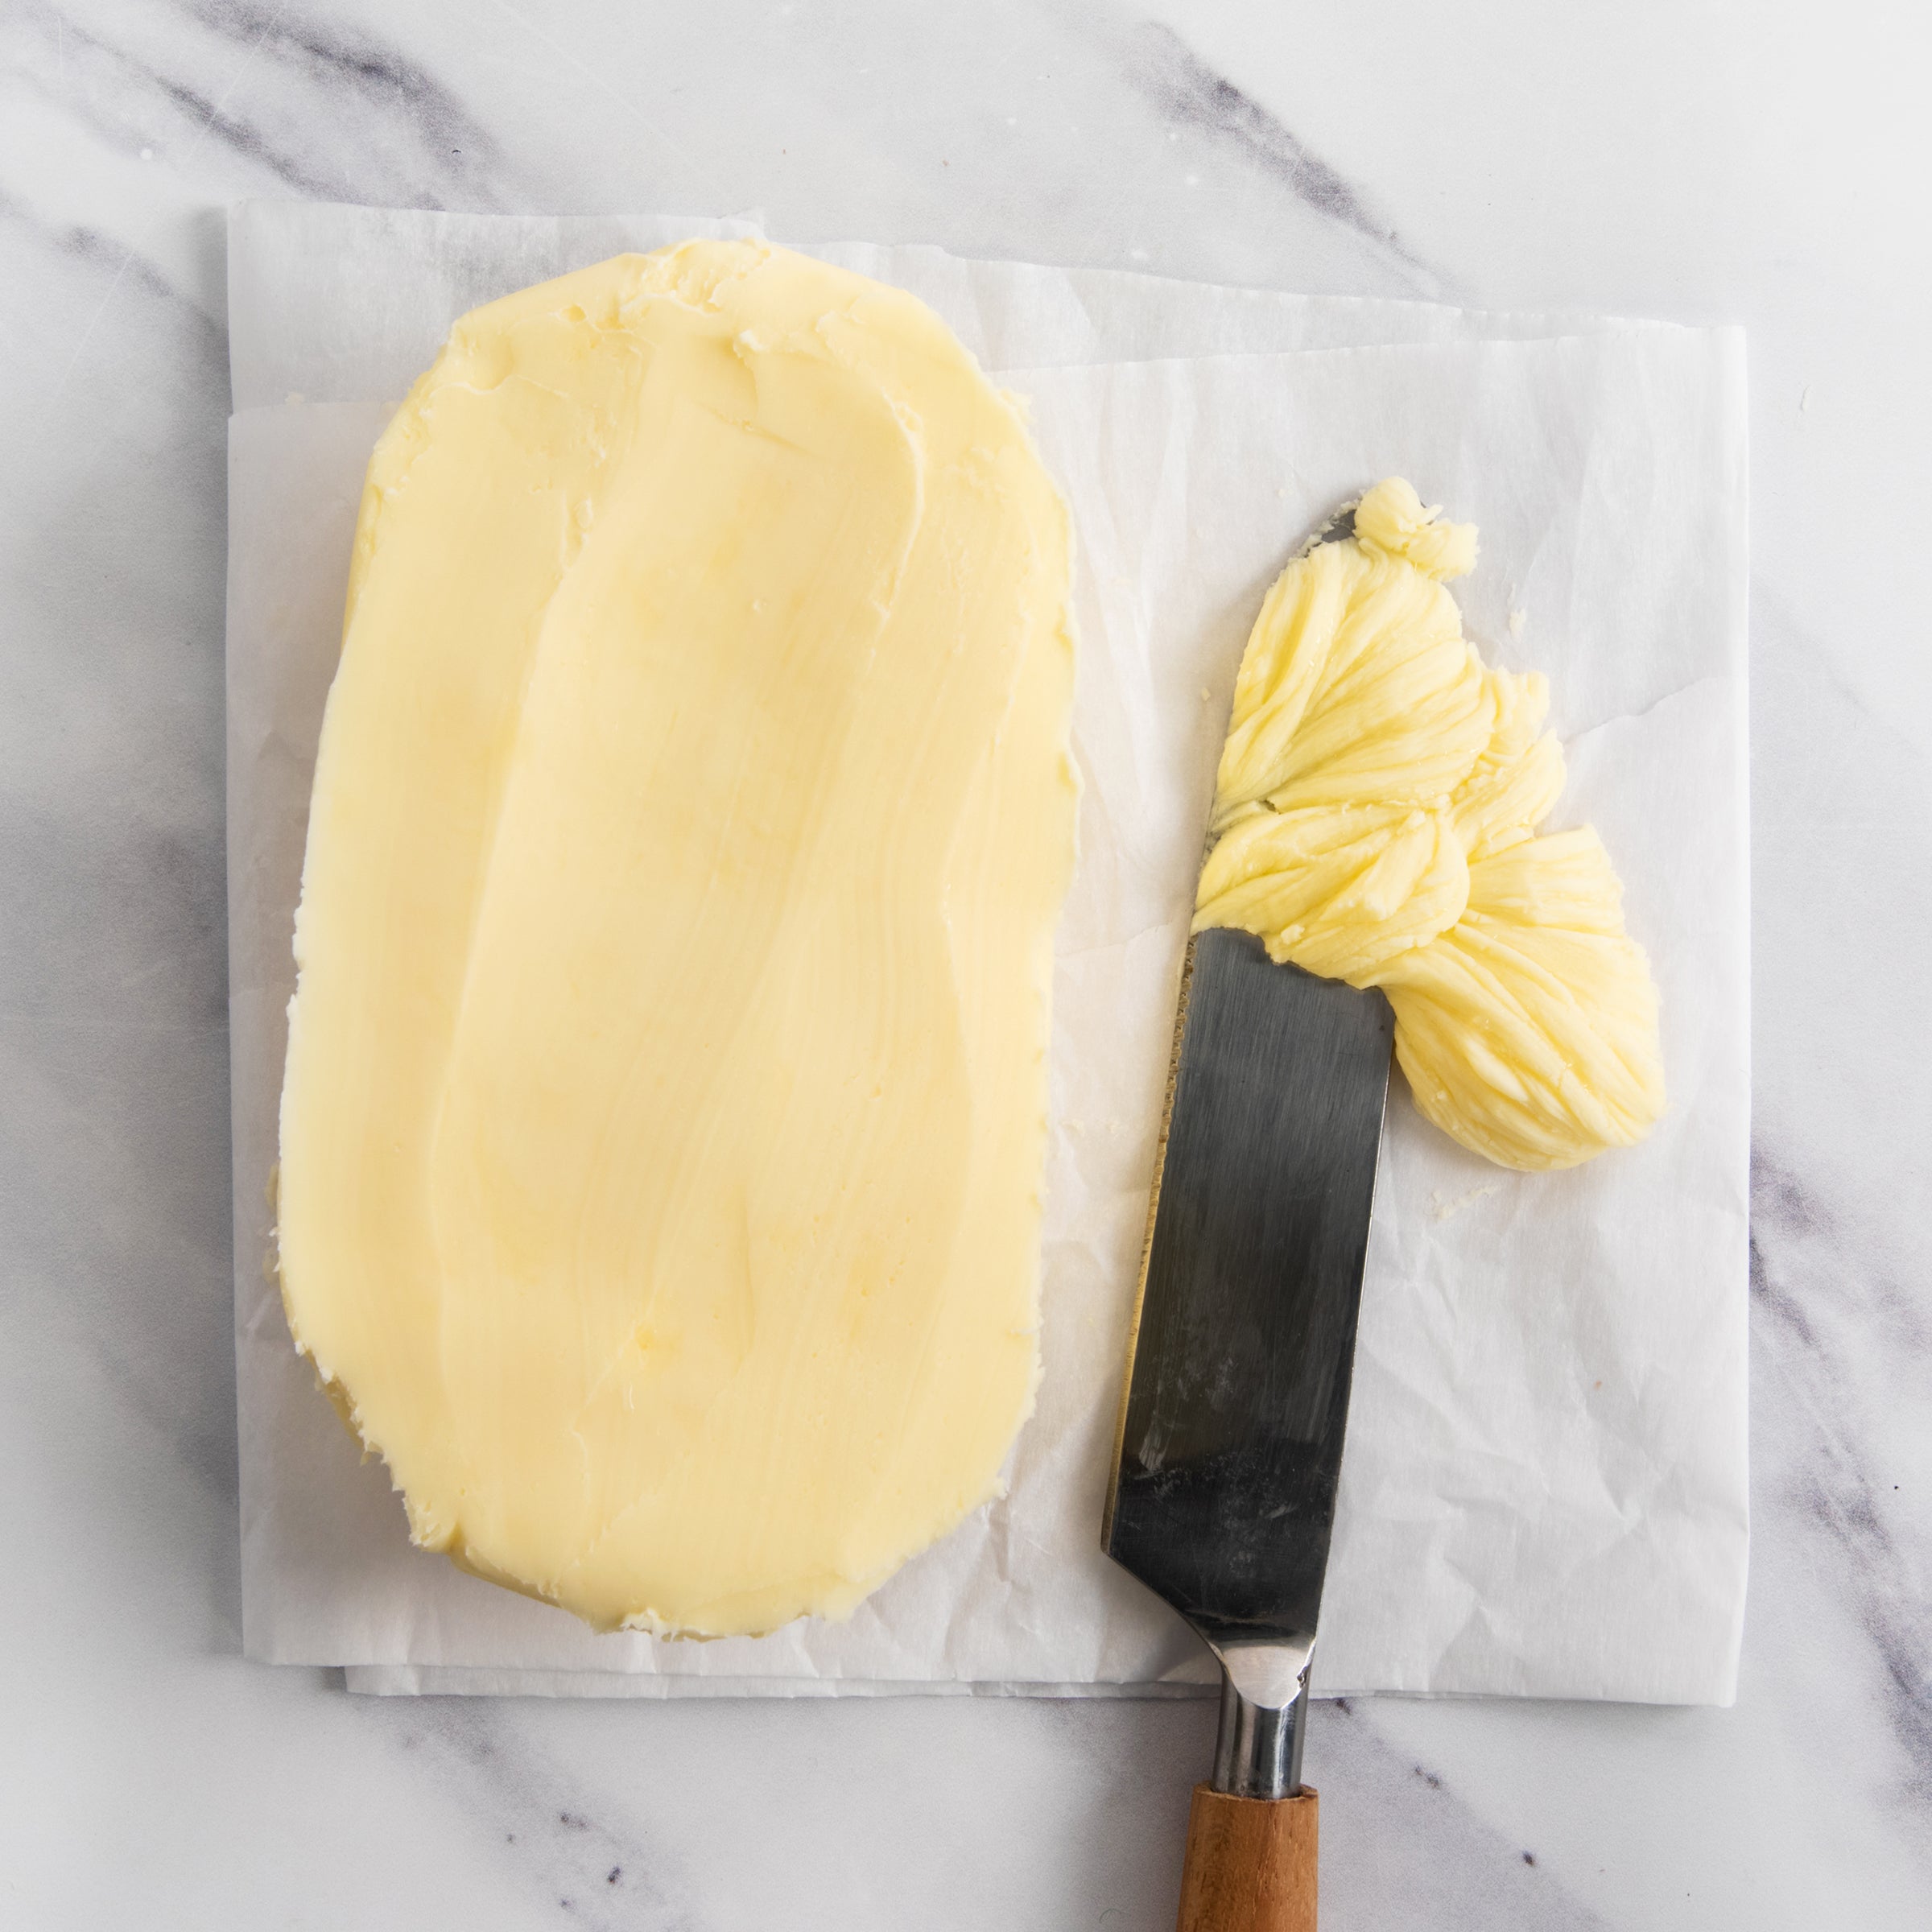 Butter from Belgium - igourmet